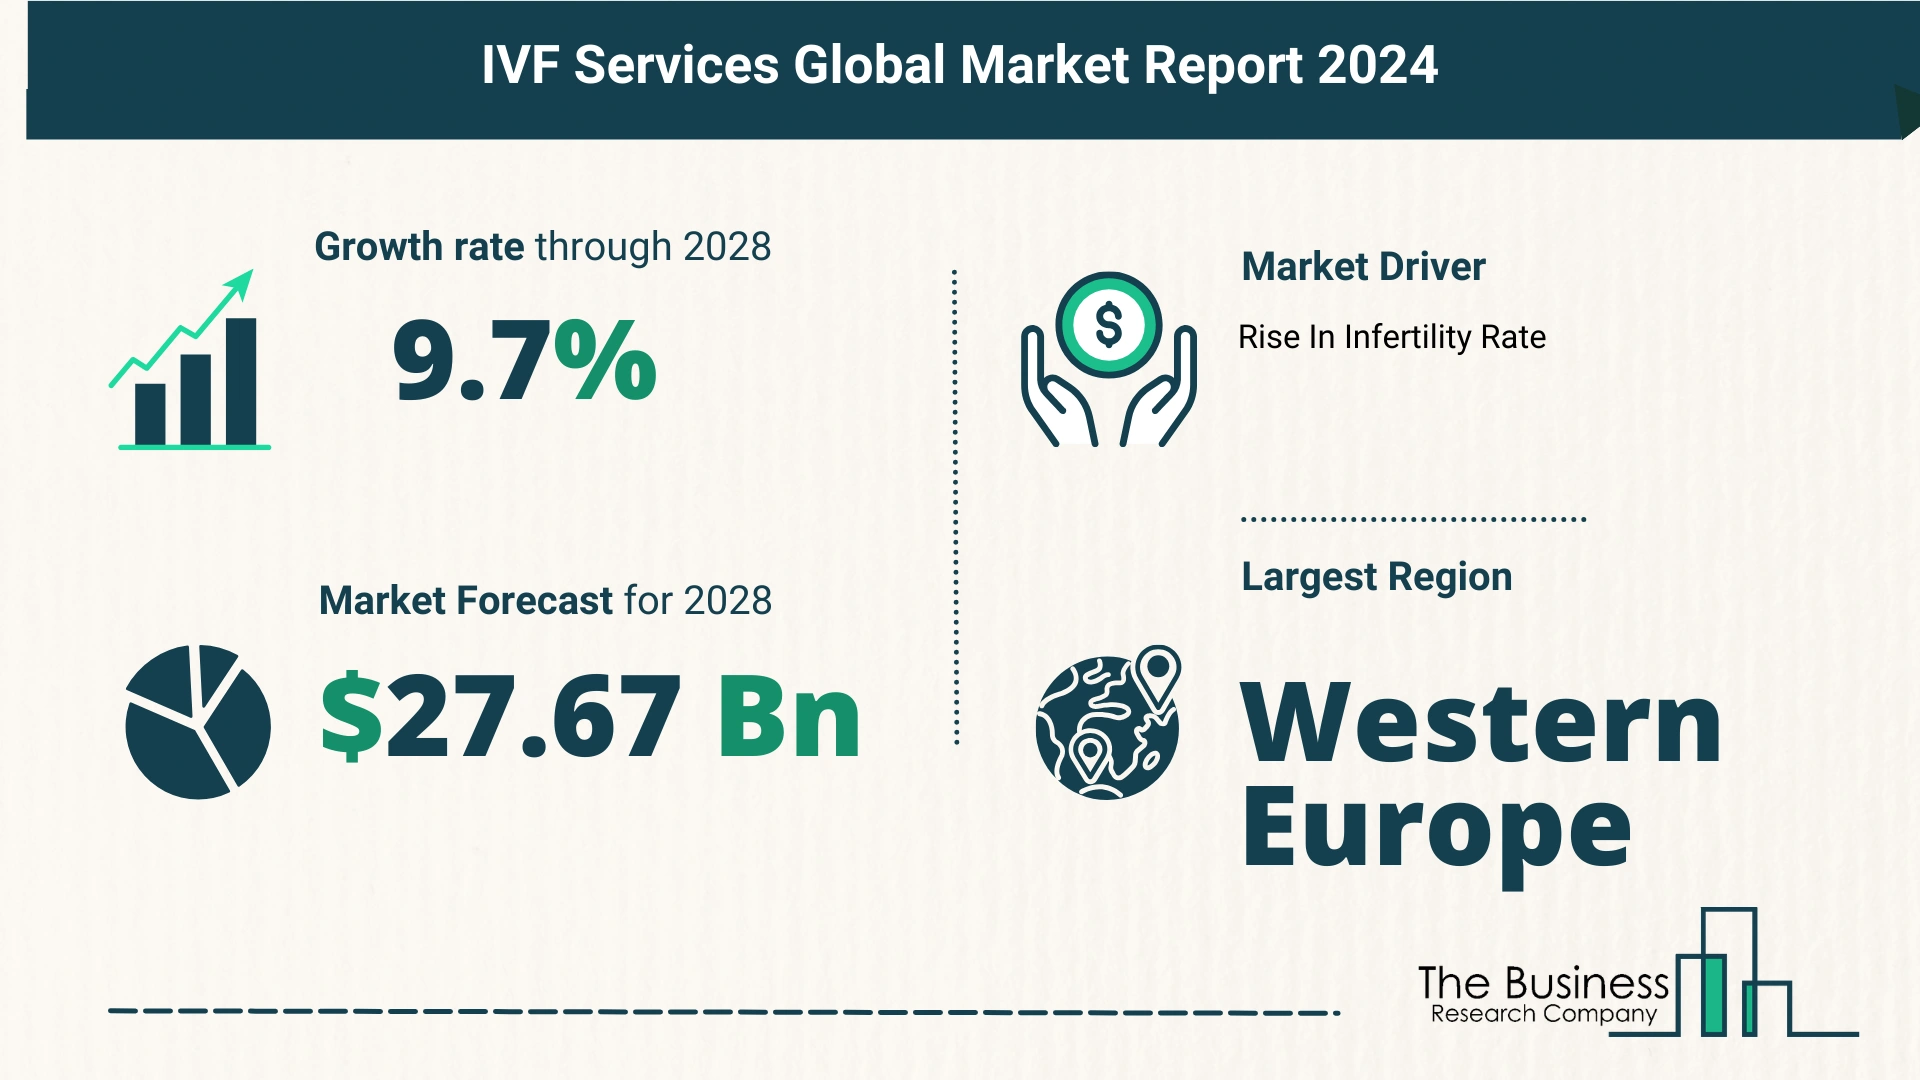 Global IVF Services Market Size